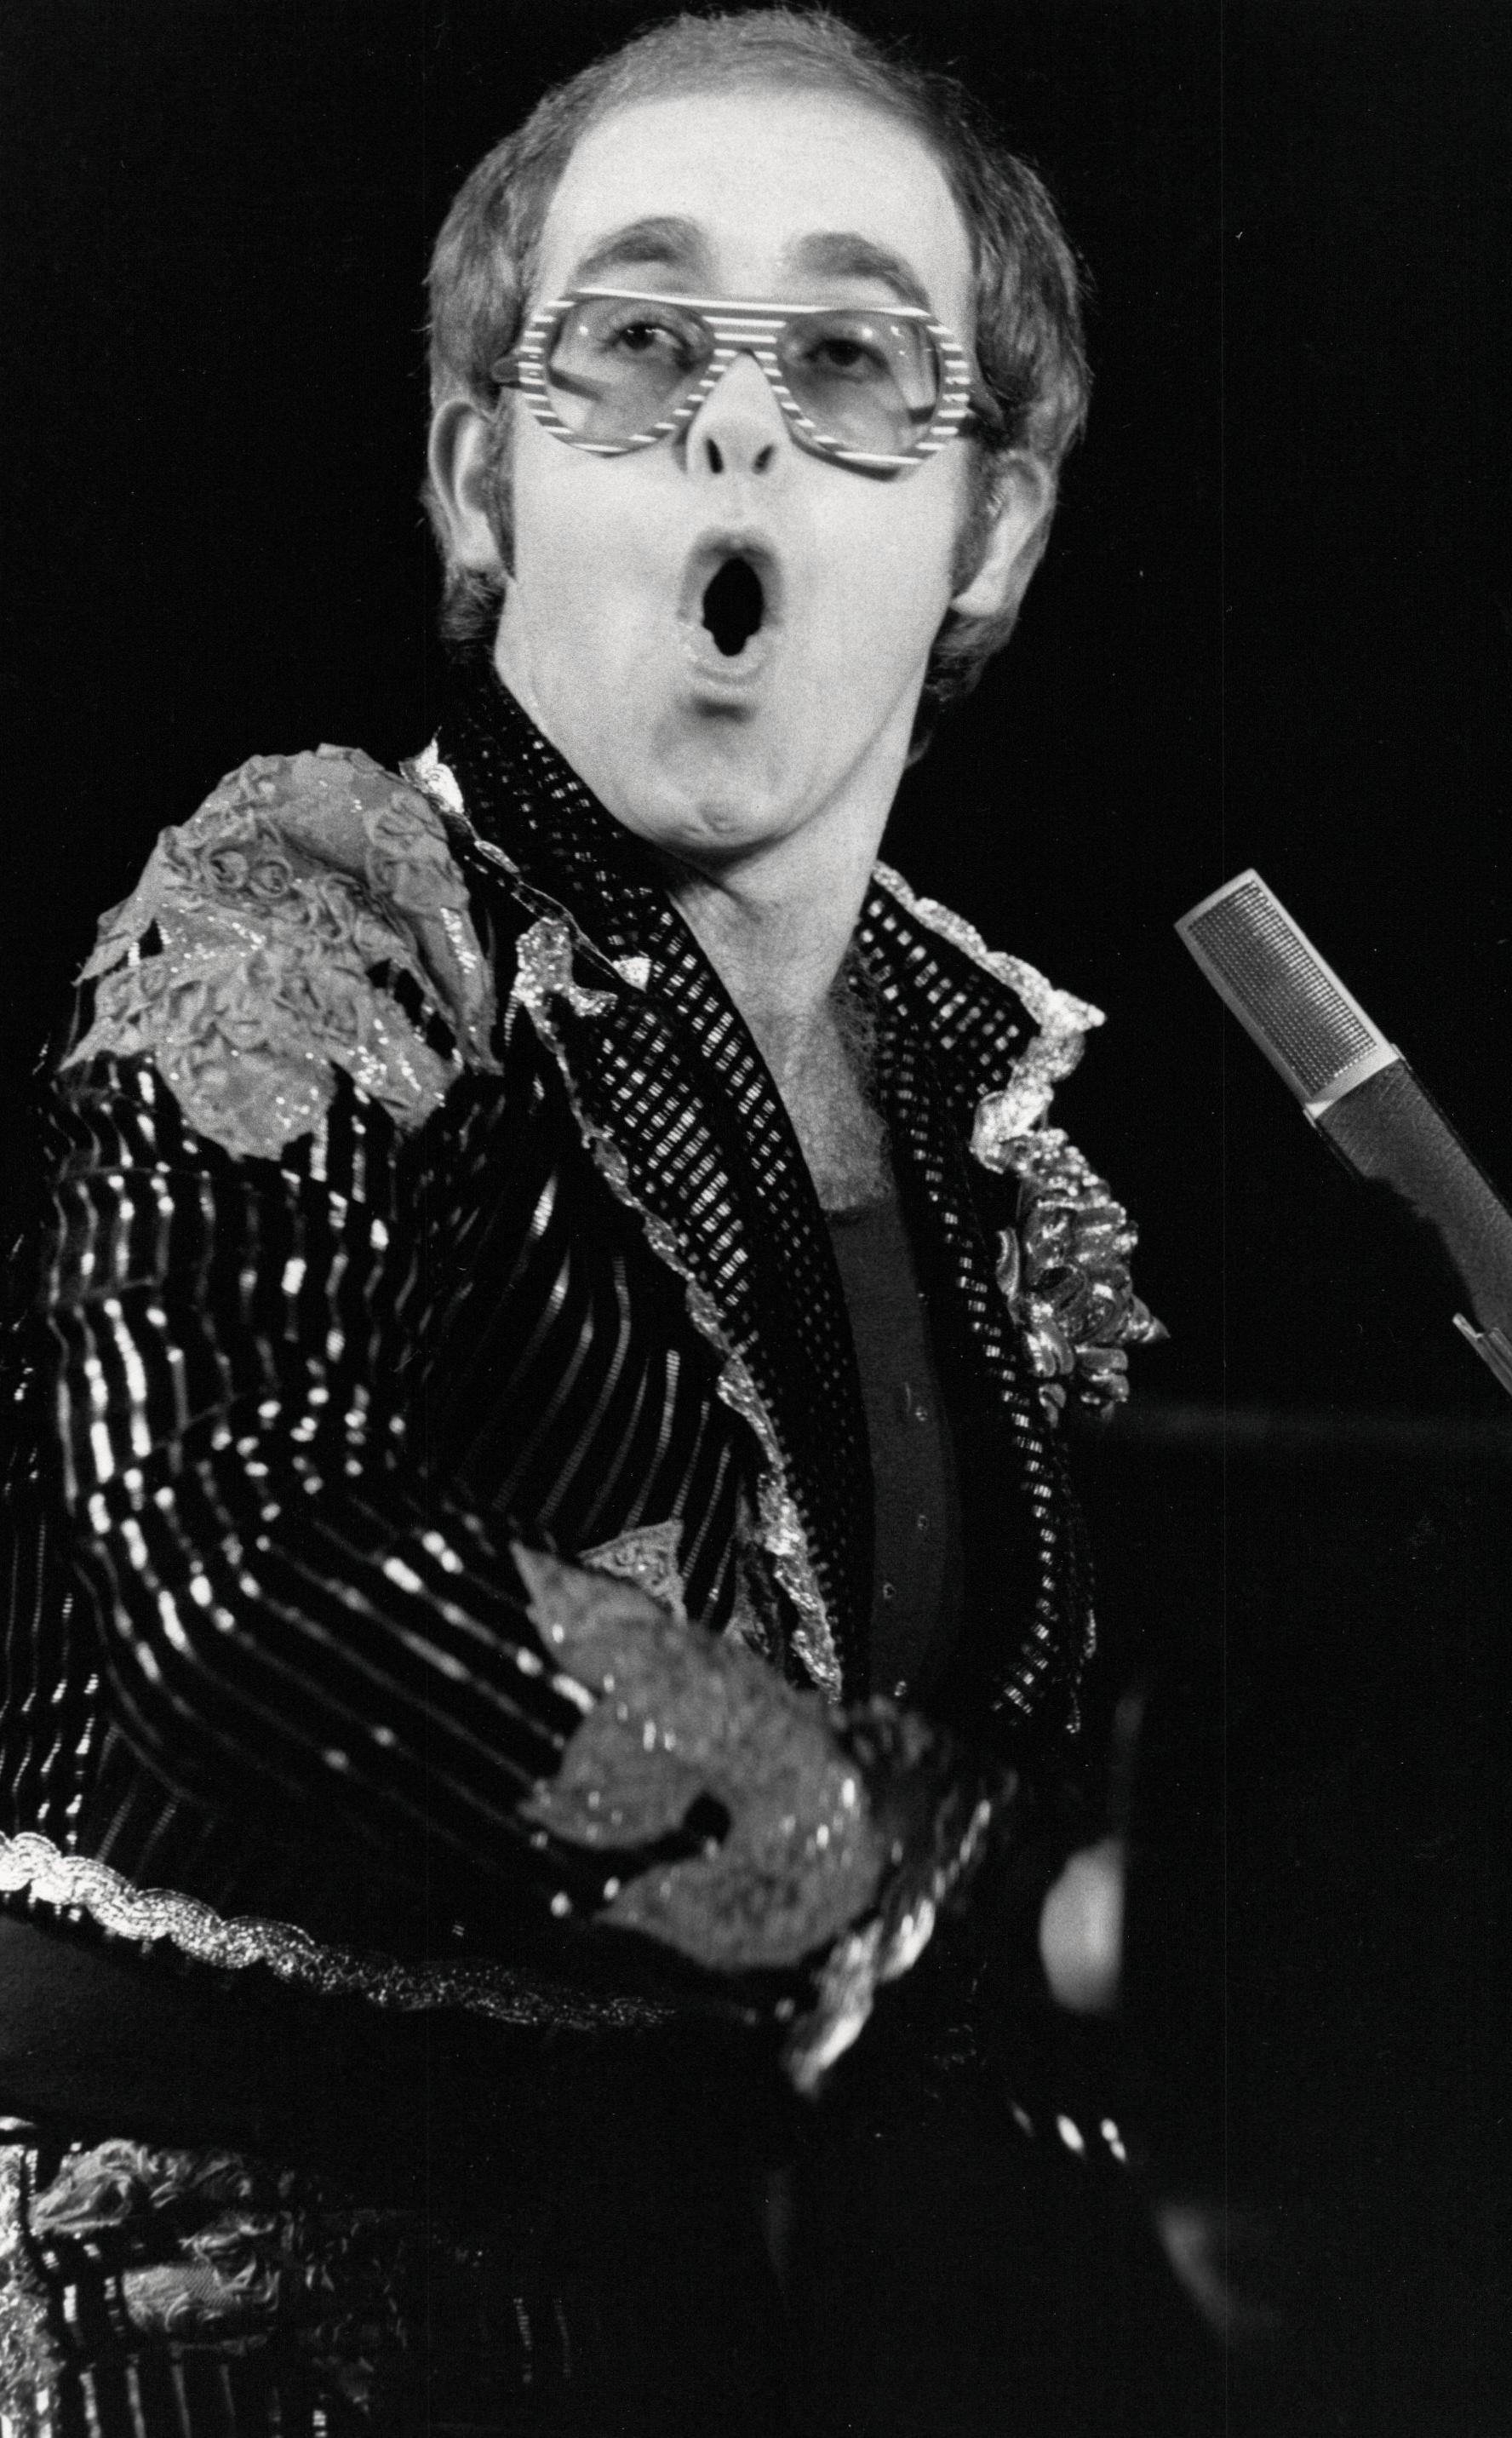 Unknown Portrait Photograph - Elton John Performing in Striped Glasses Vintage Original Photograph